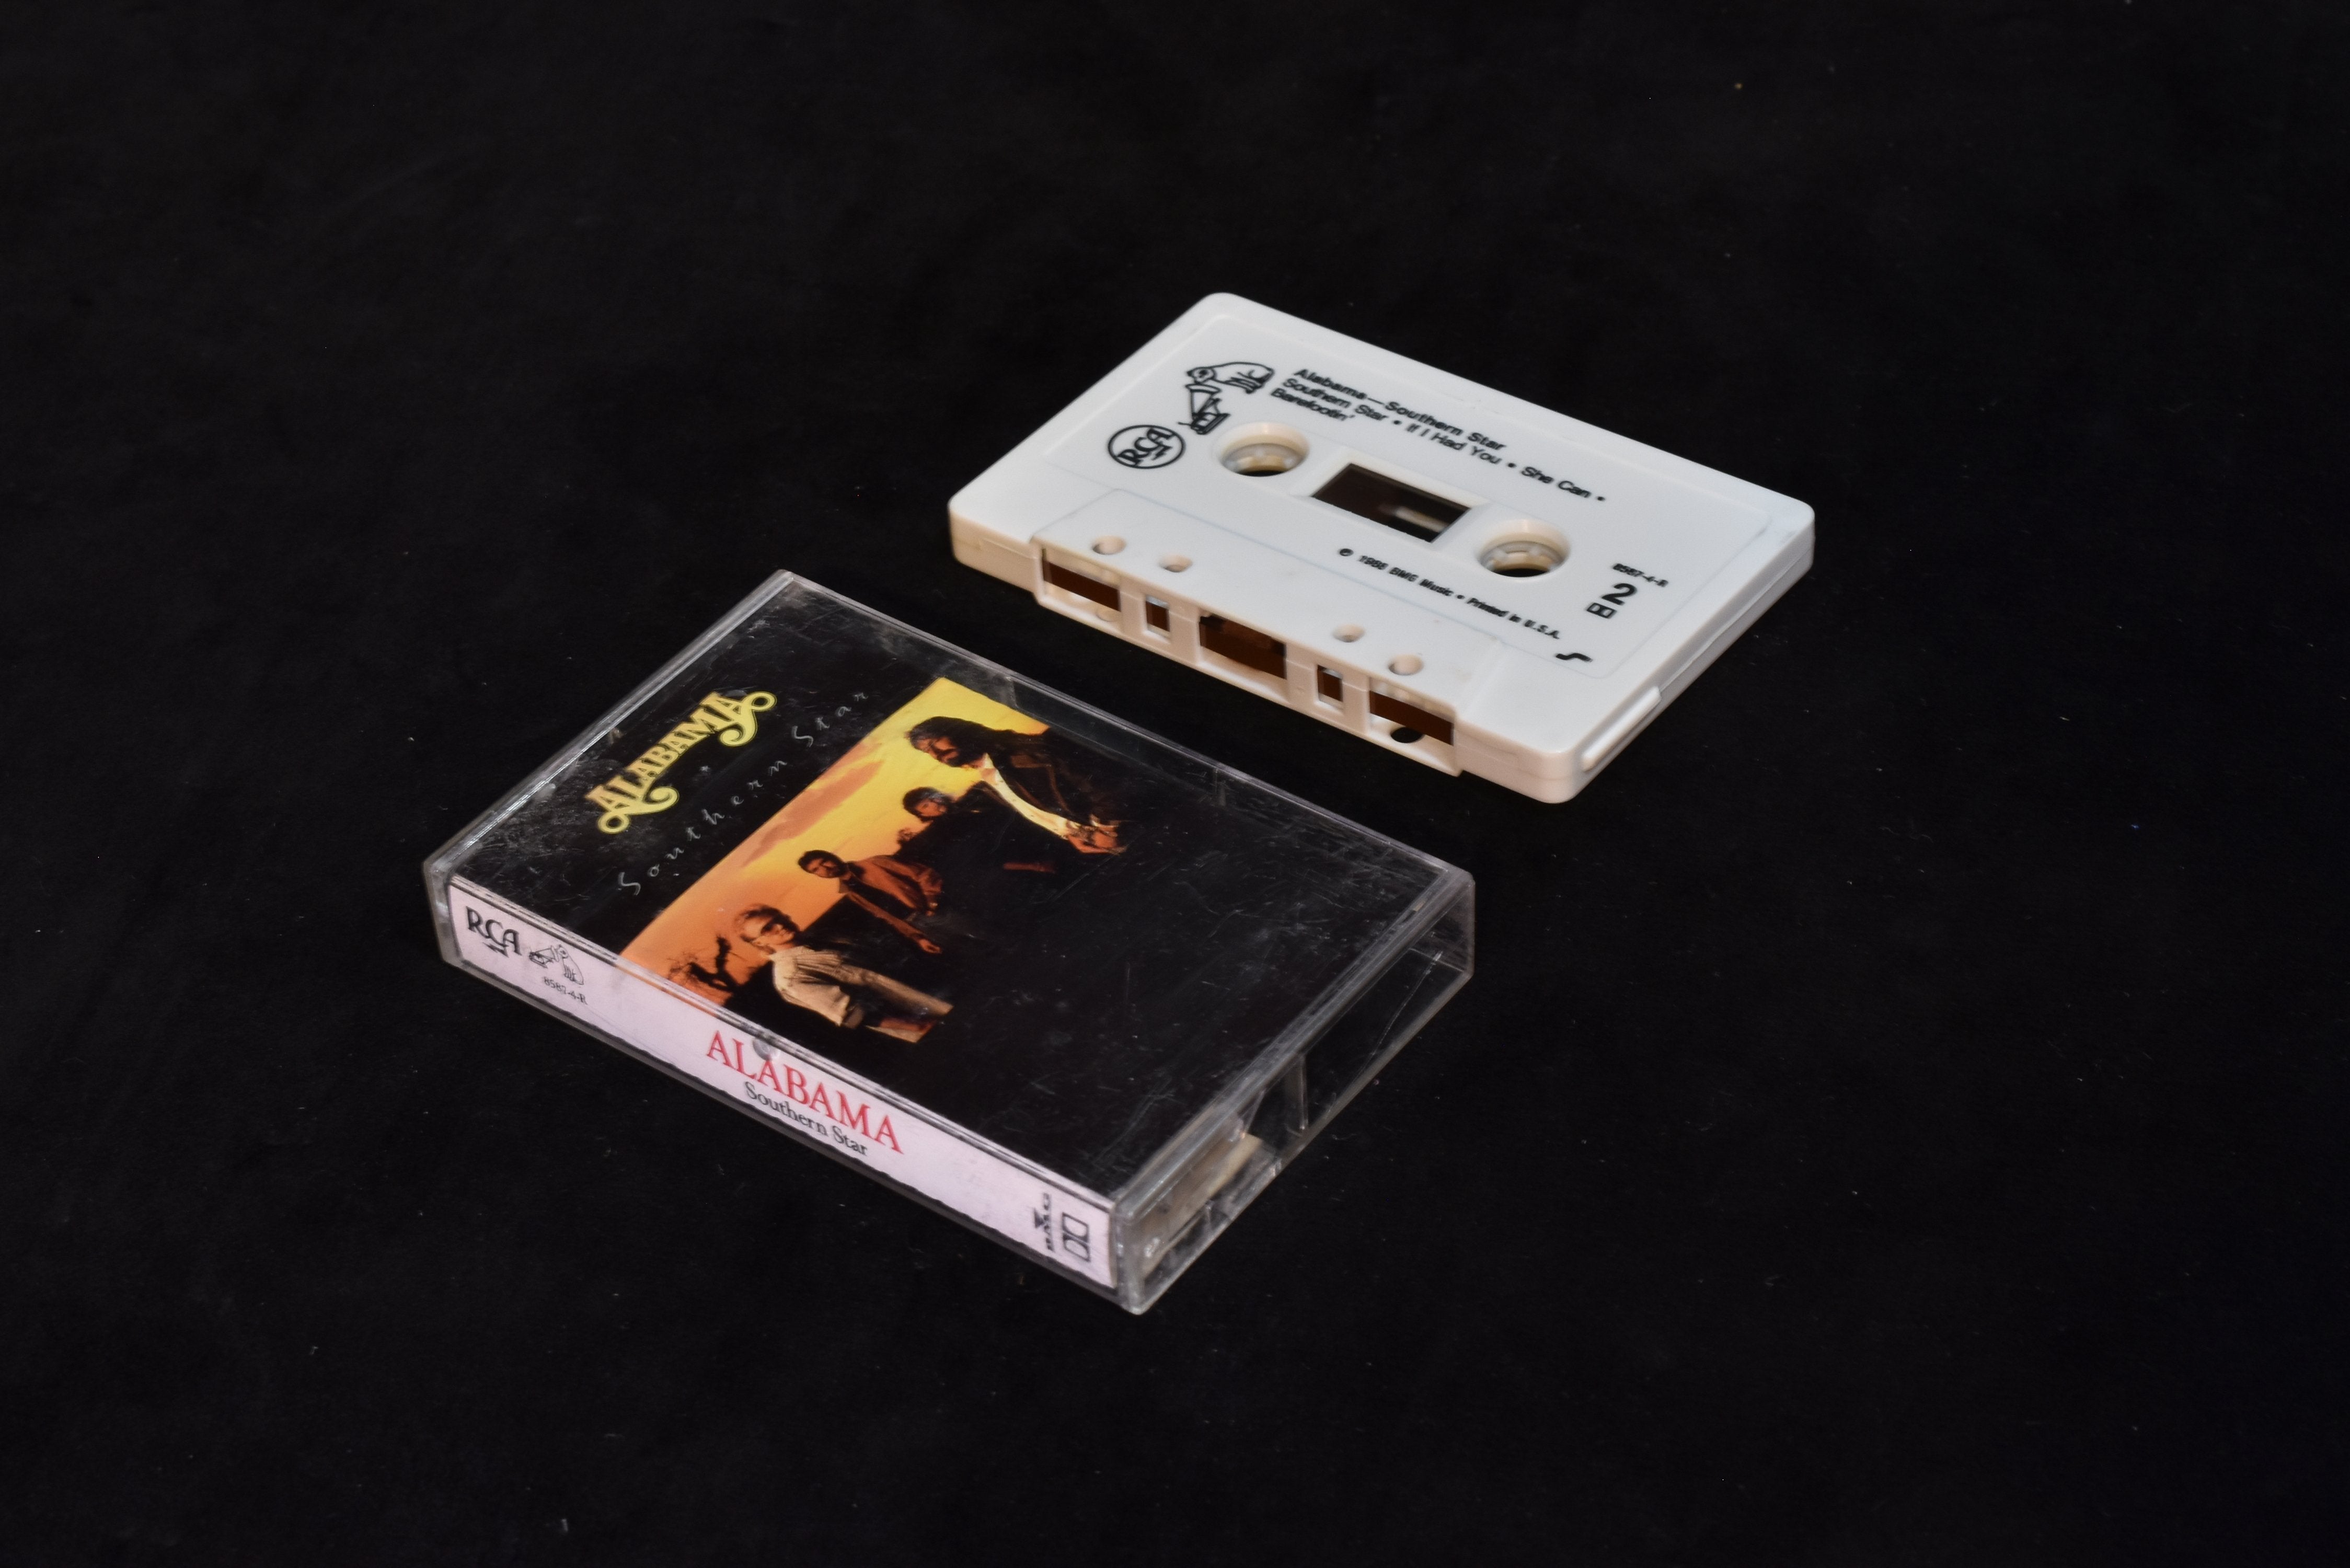 Alabama southern star cassette tape used